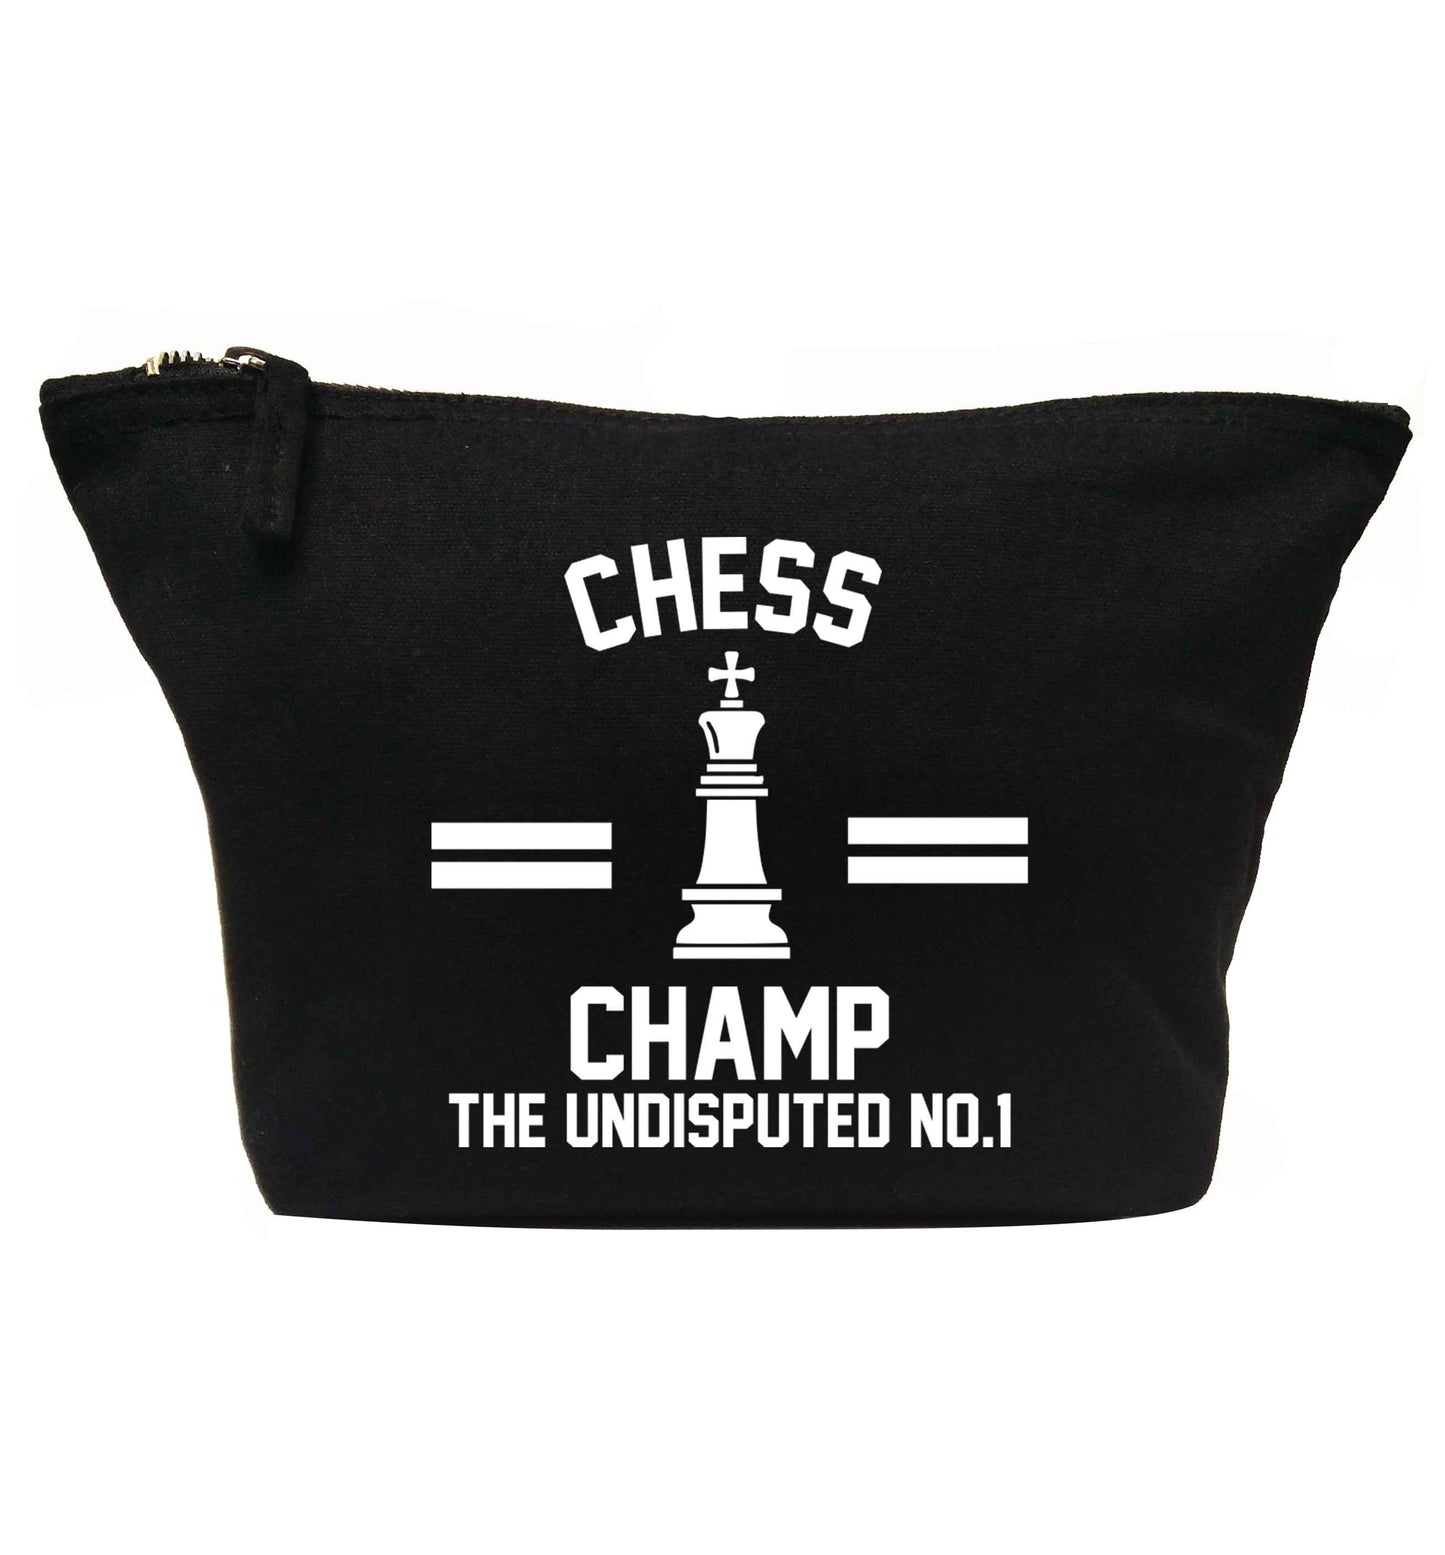 Undisputed chess championship no.1  | makeup / wash bag